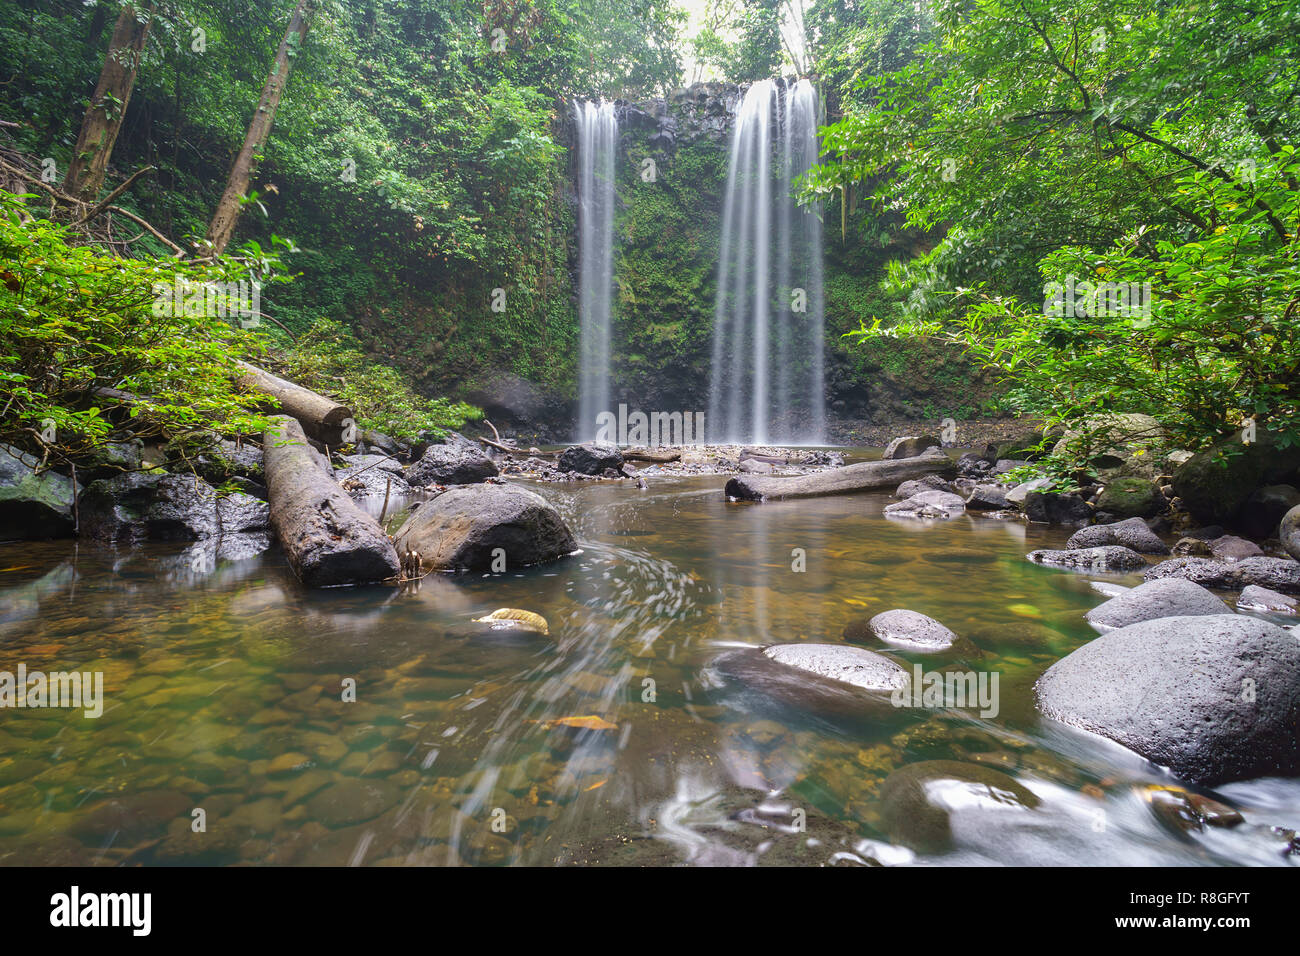 Madai waterfall in the tropical rainforest jungle of Borneo Sabah Malaysia. Stock Photo